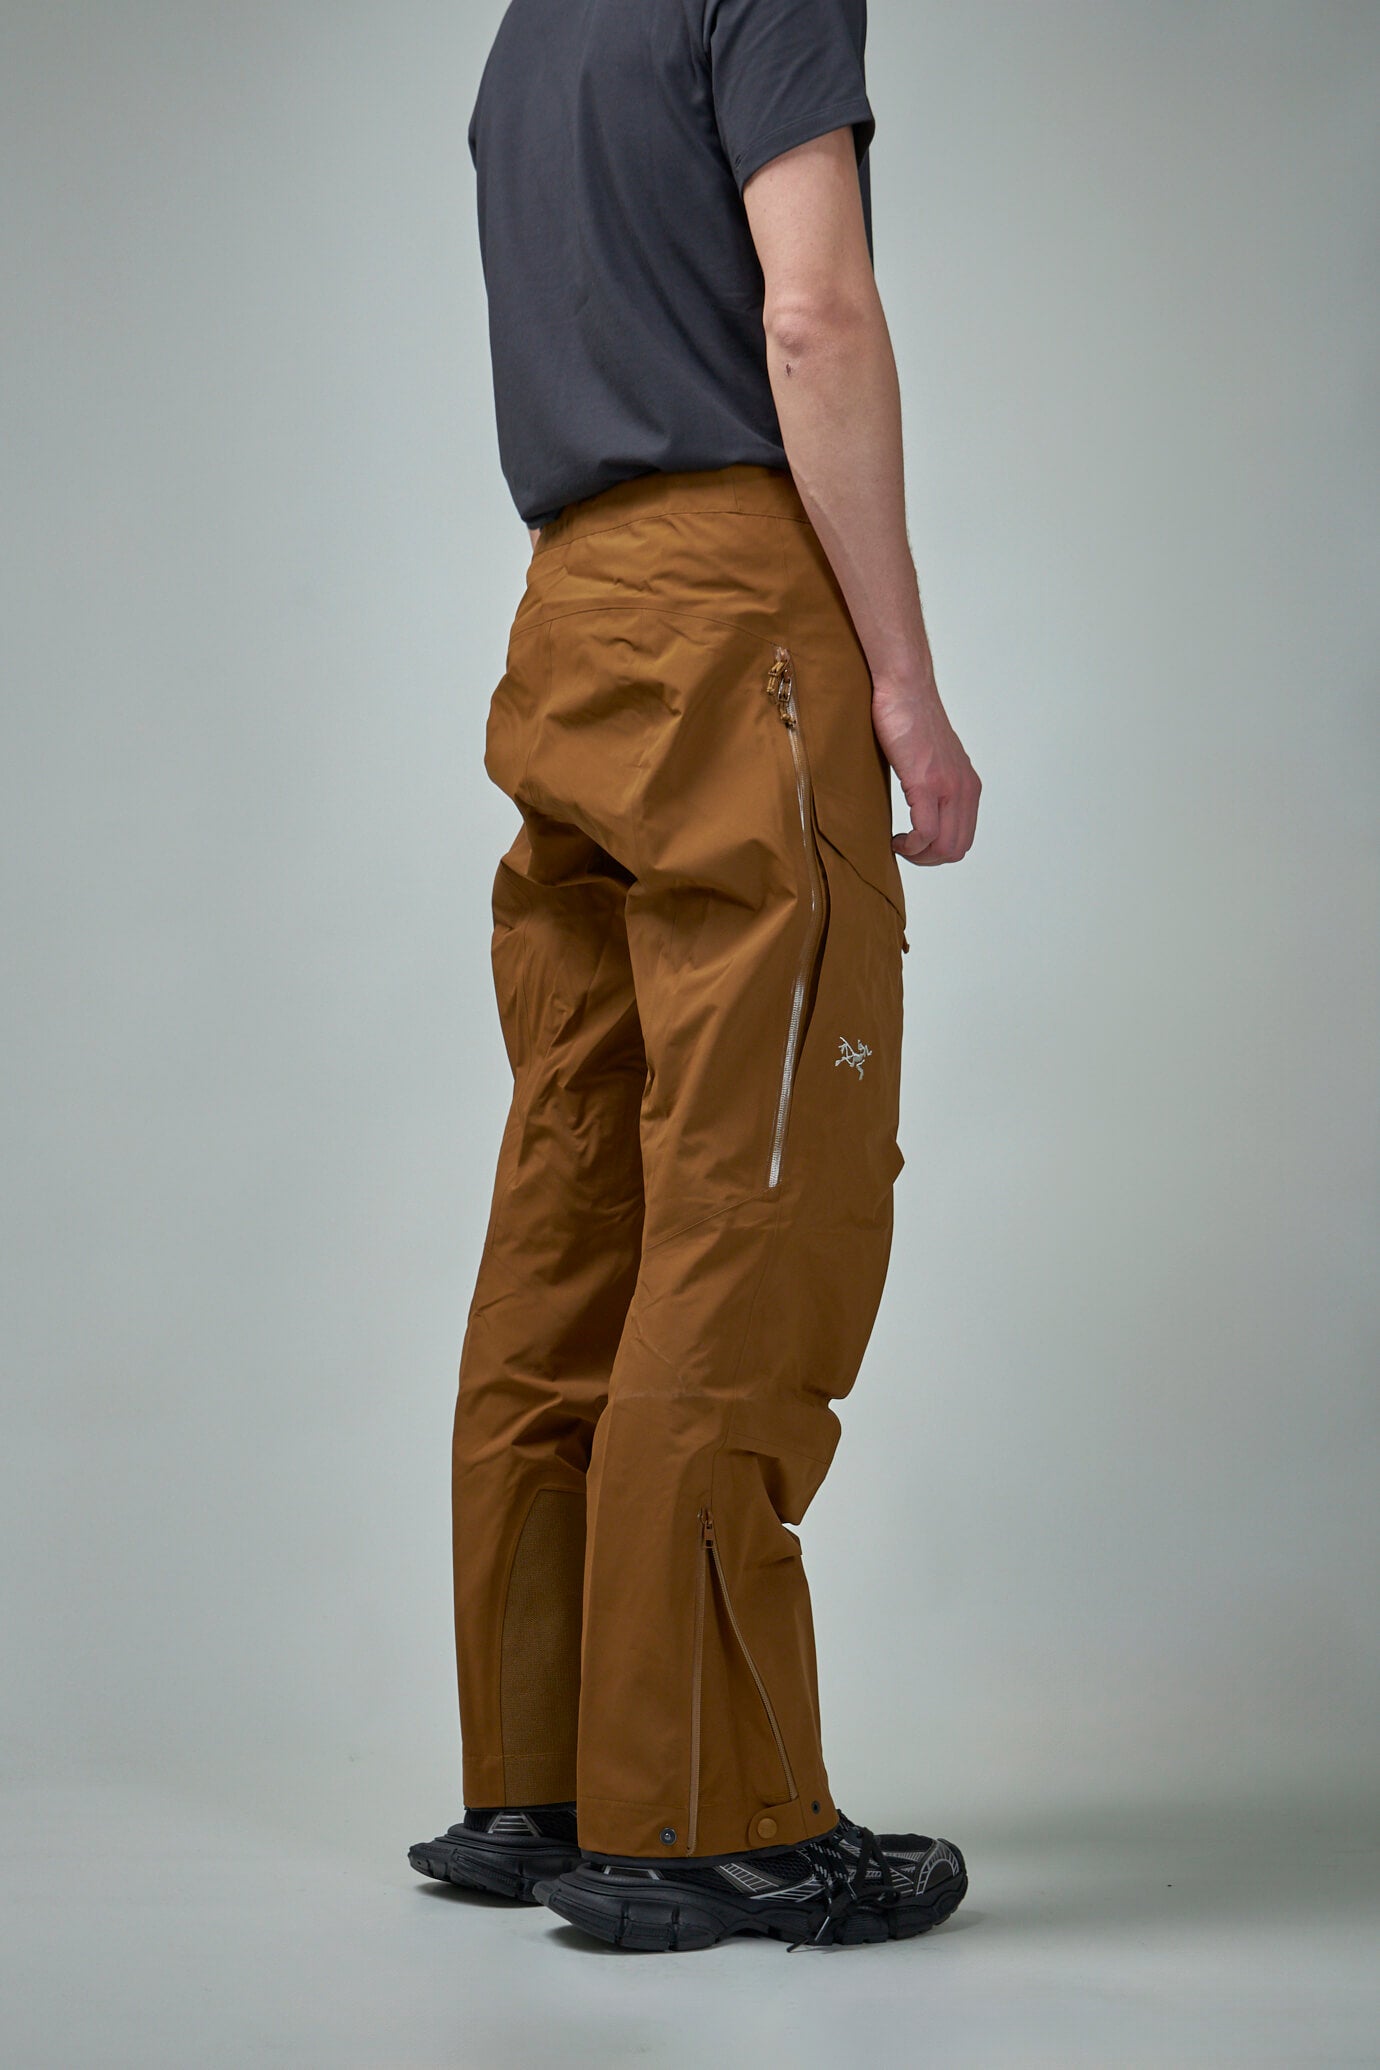 Arcteryx Men's Gamma LT Pant Regular | Men's Hiking Trousers | George Fisher